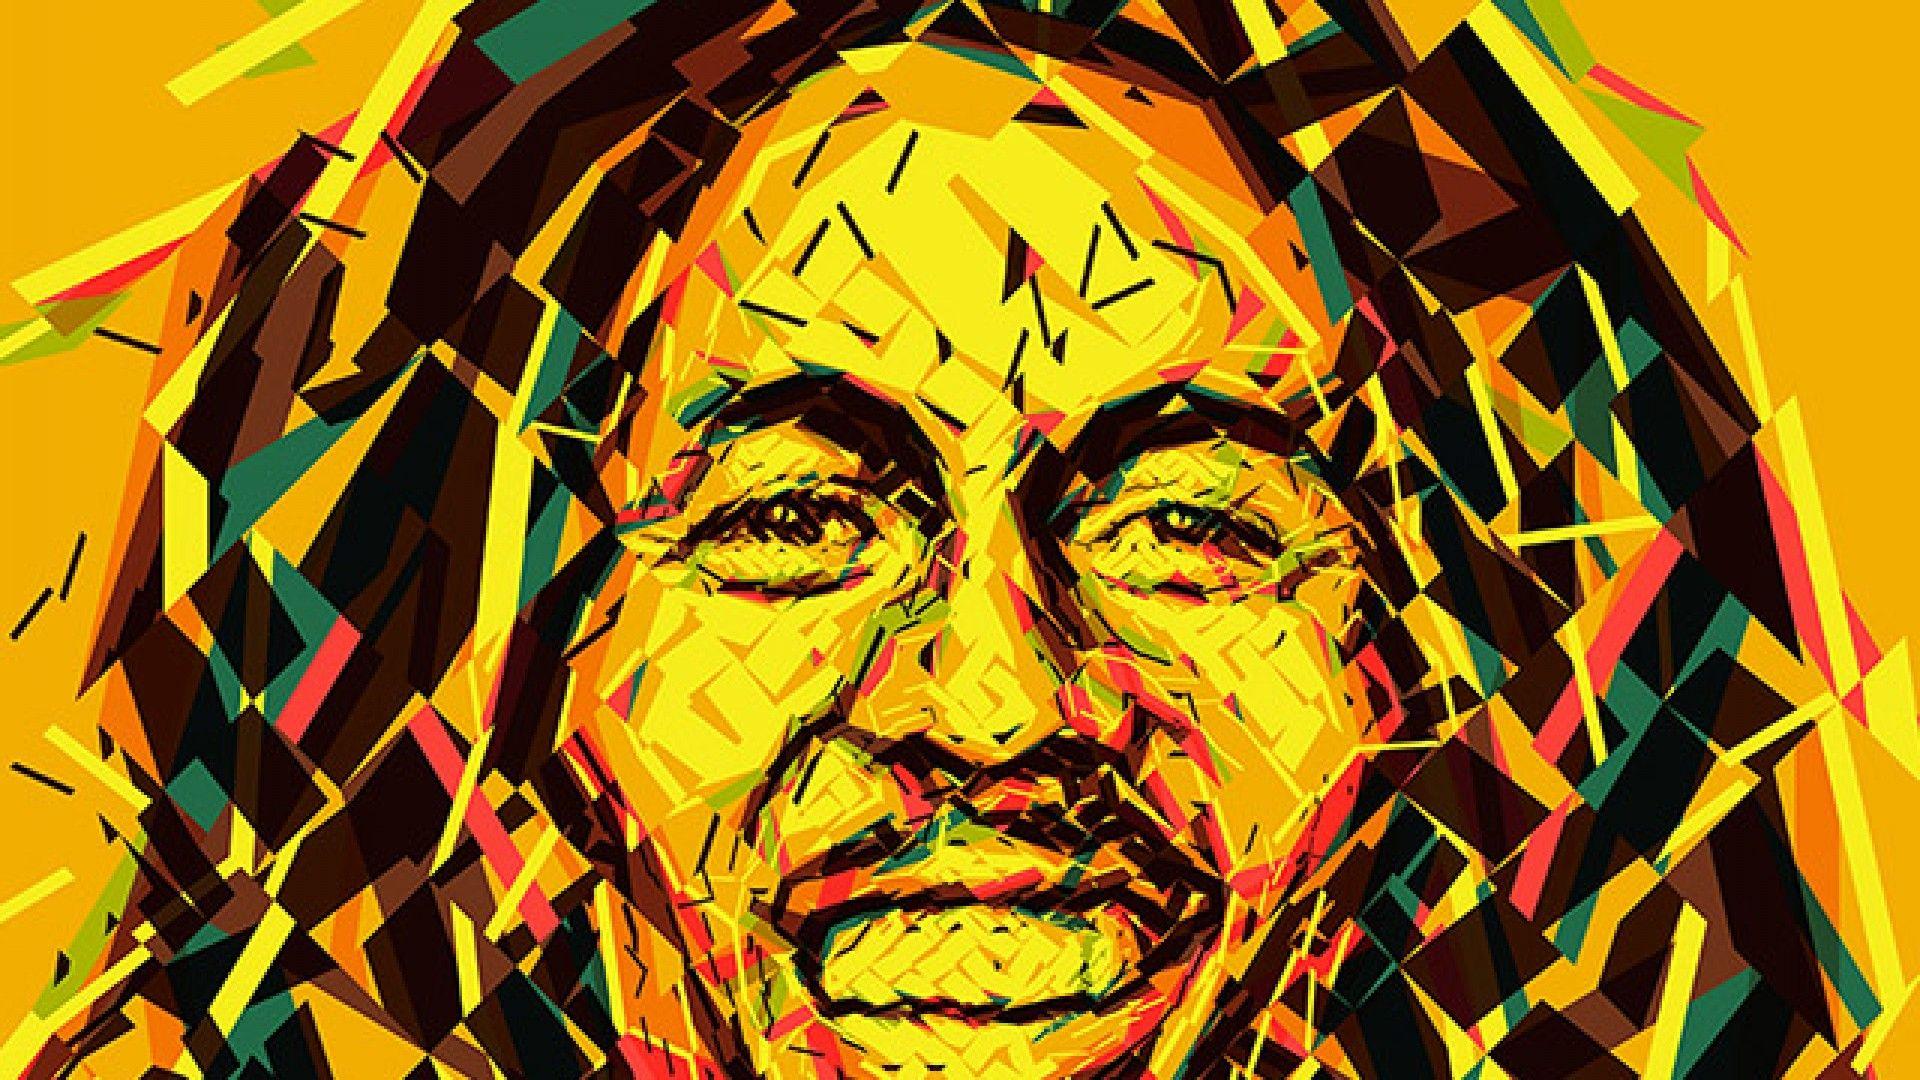 HD Bob Marley Wallpapers - Wallpaper Cave